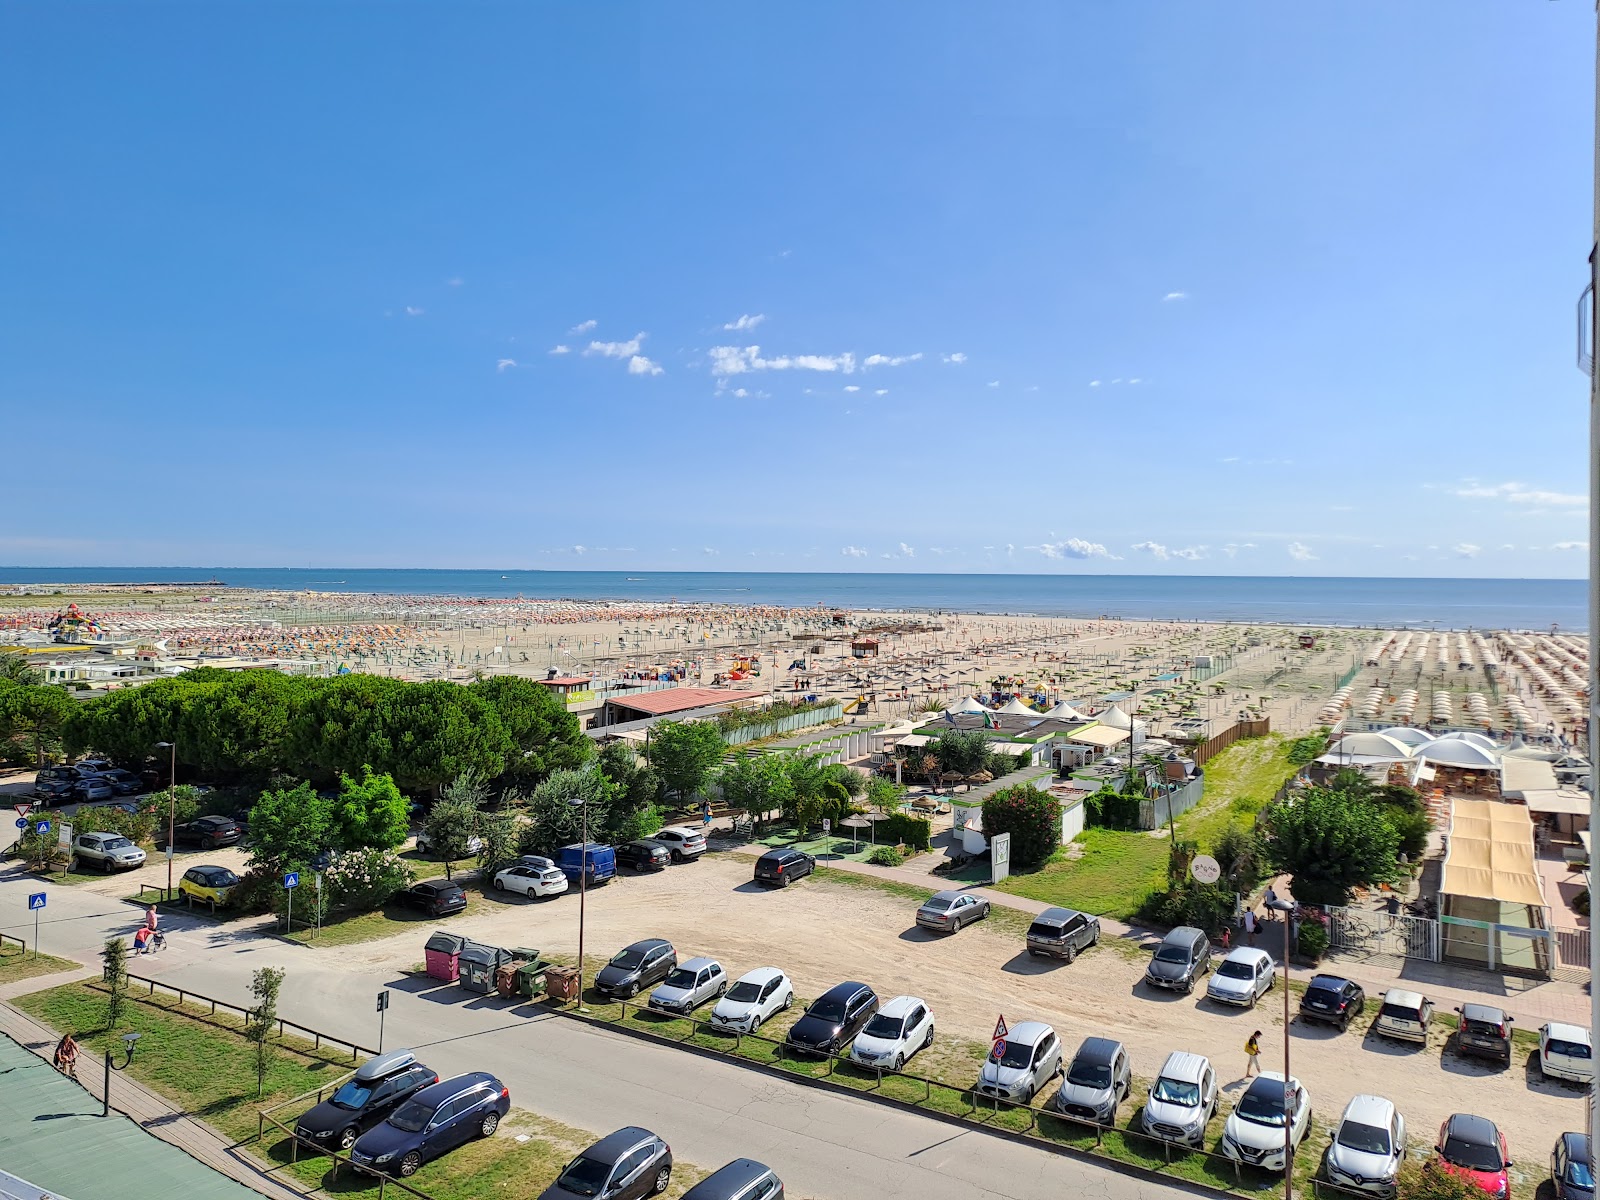 Foto de Spiaggia Lido Degli Estensi - lugar popular entre os apreciadores de relaxamento